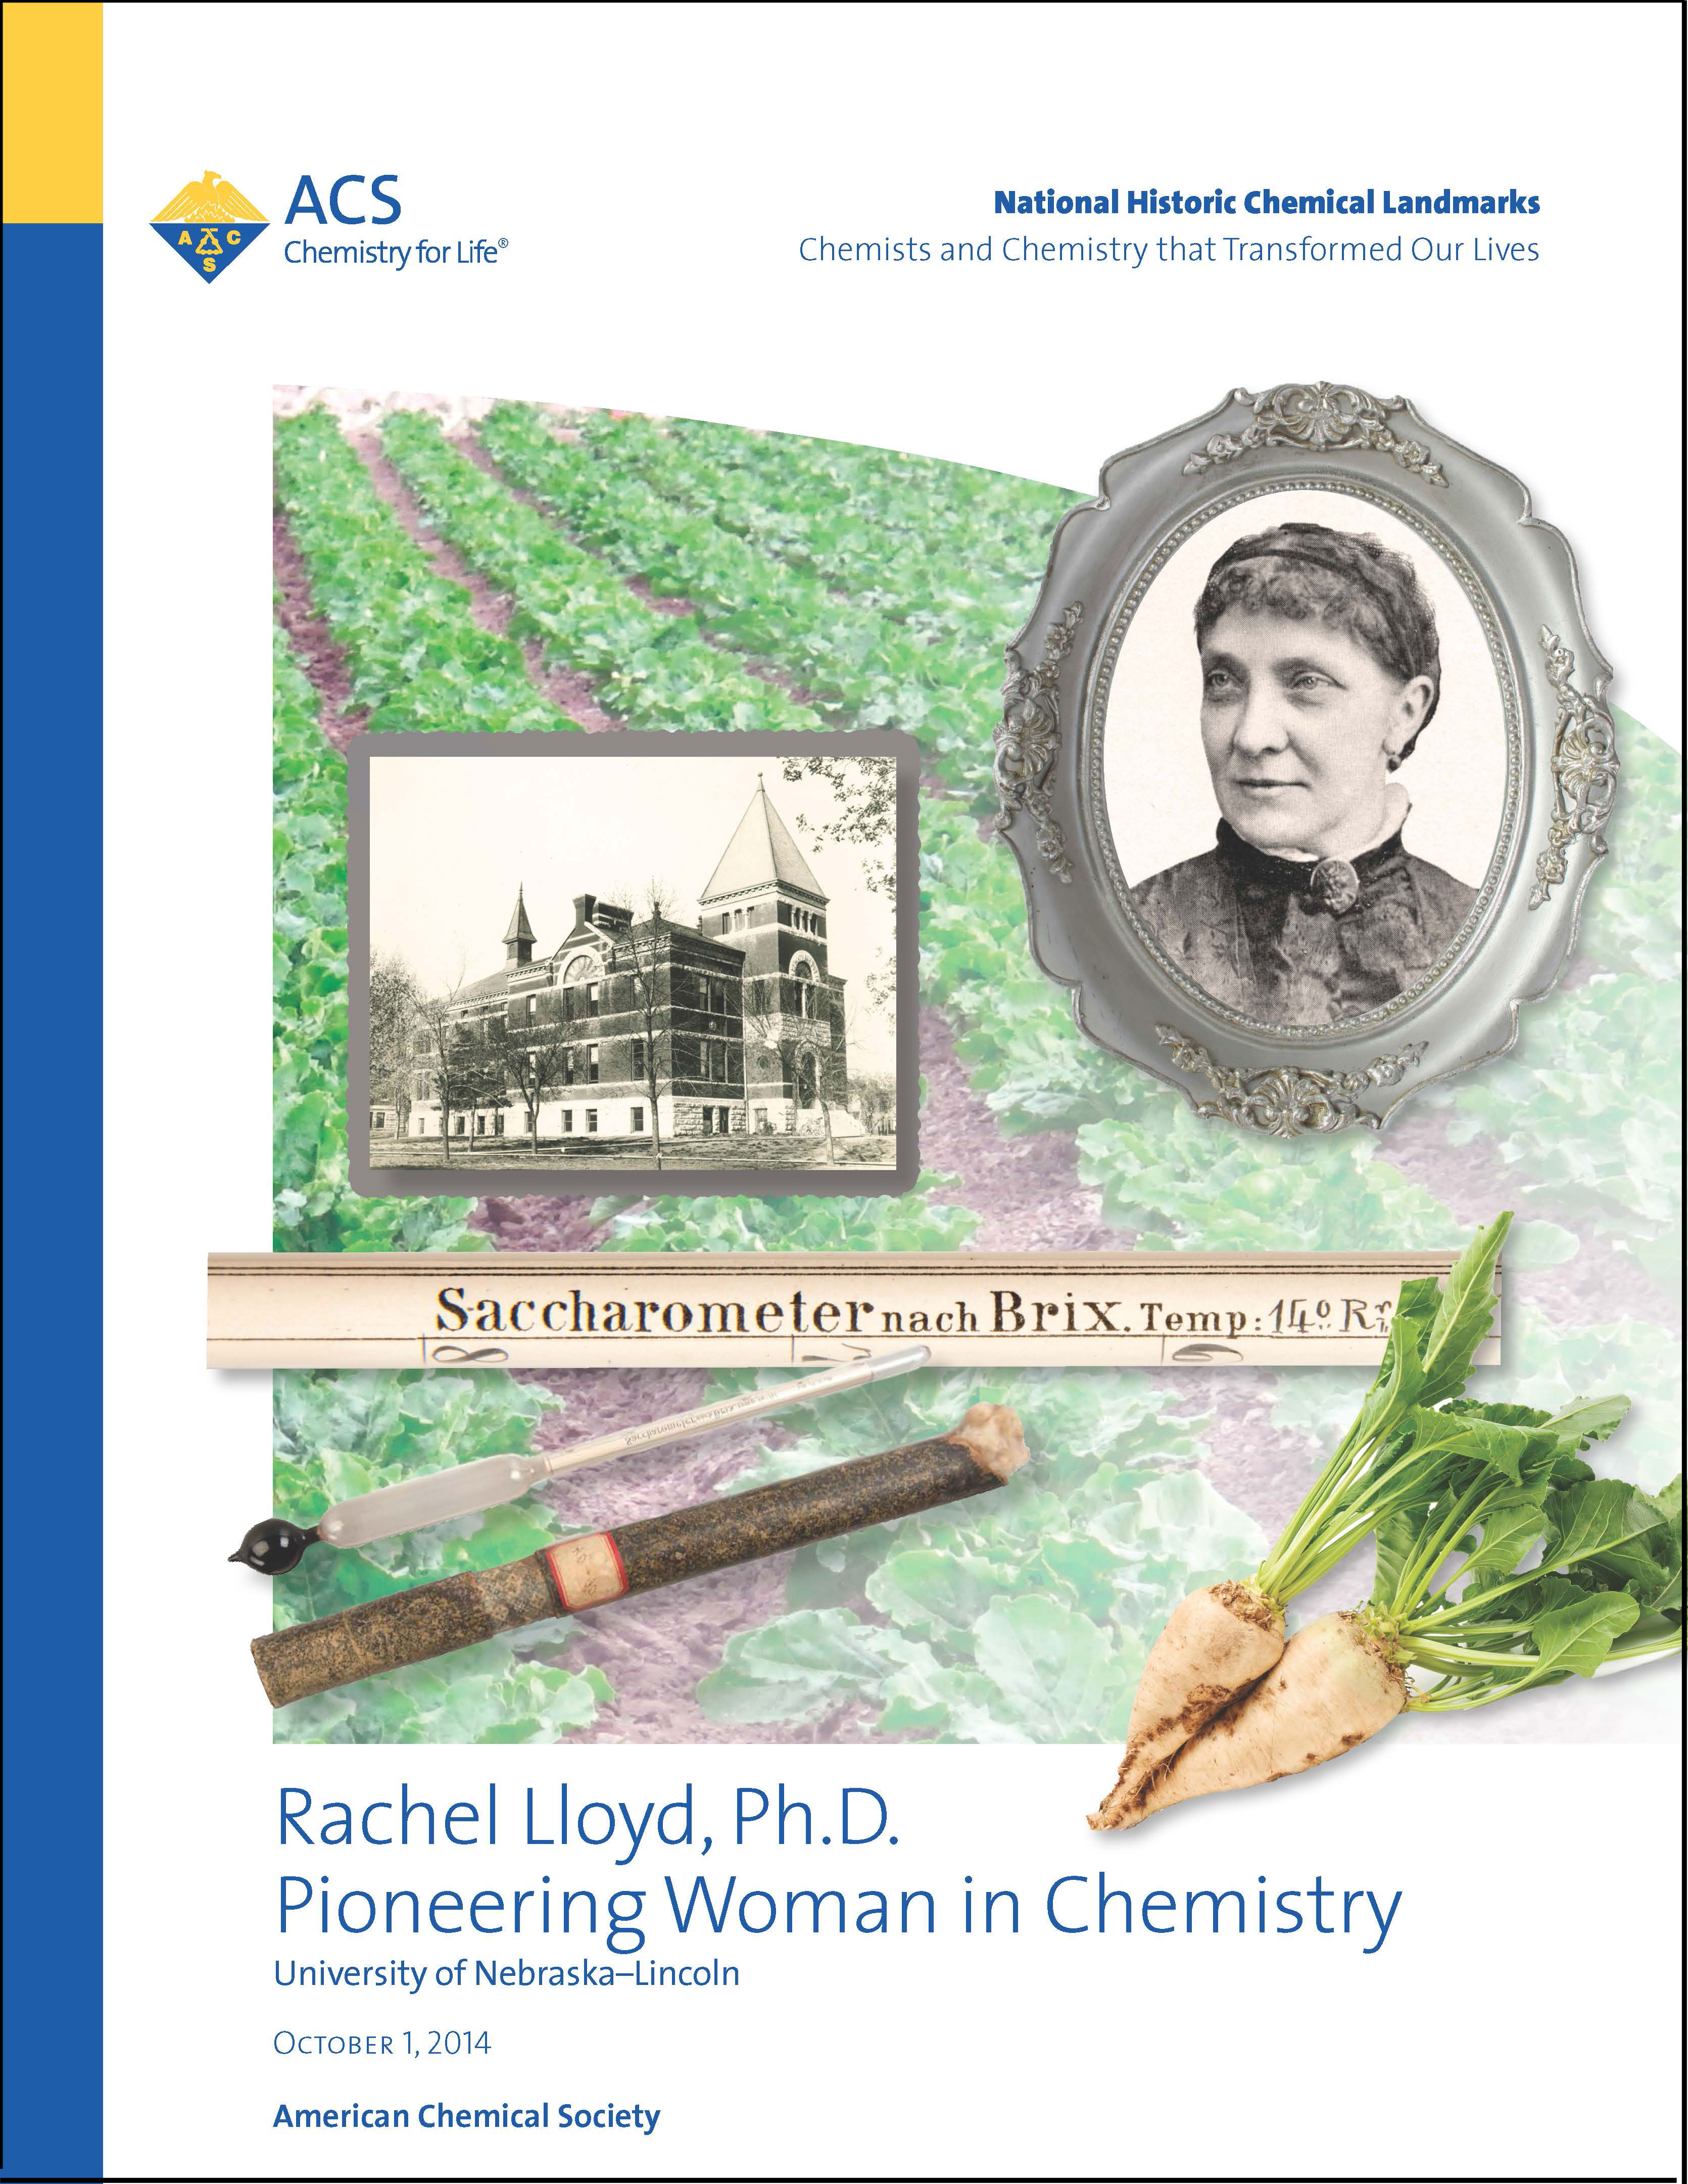 "Rachel Lloyd, Ph.D., Pioneering Woman in Chemistry" commemorative booklet